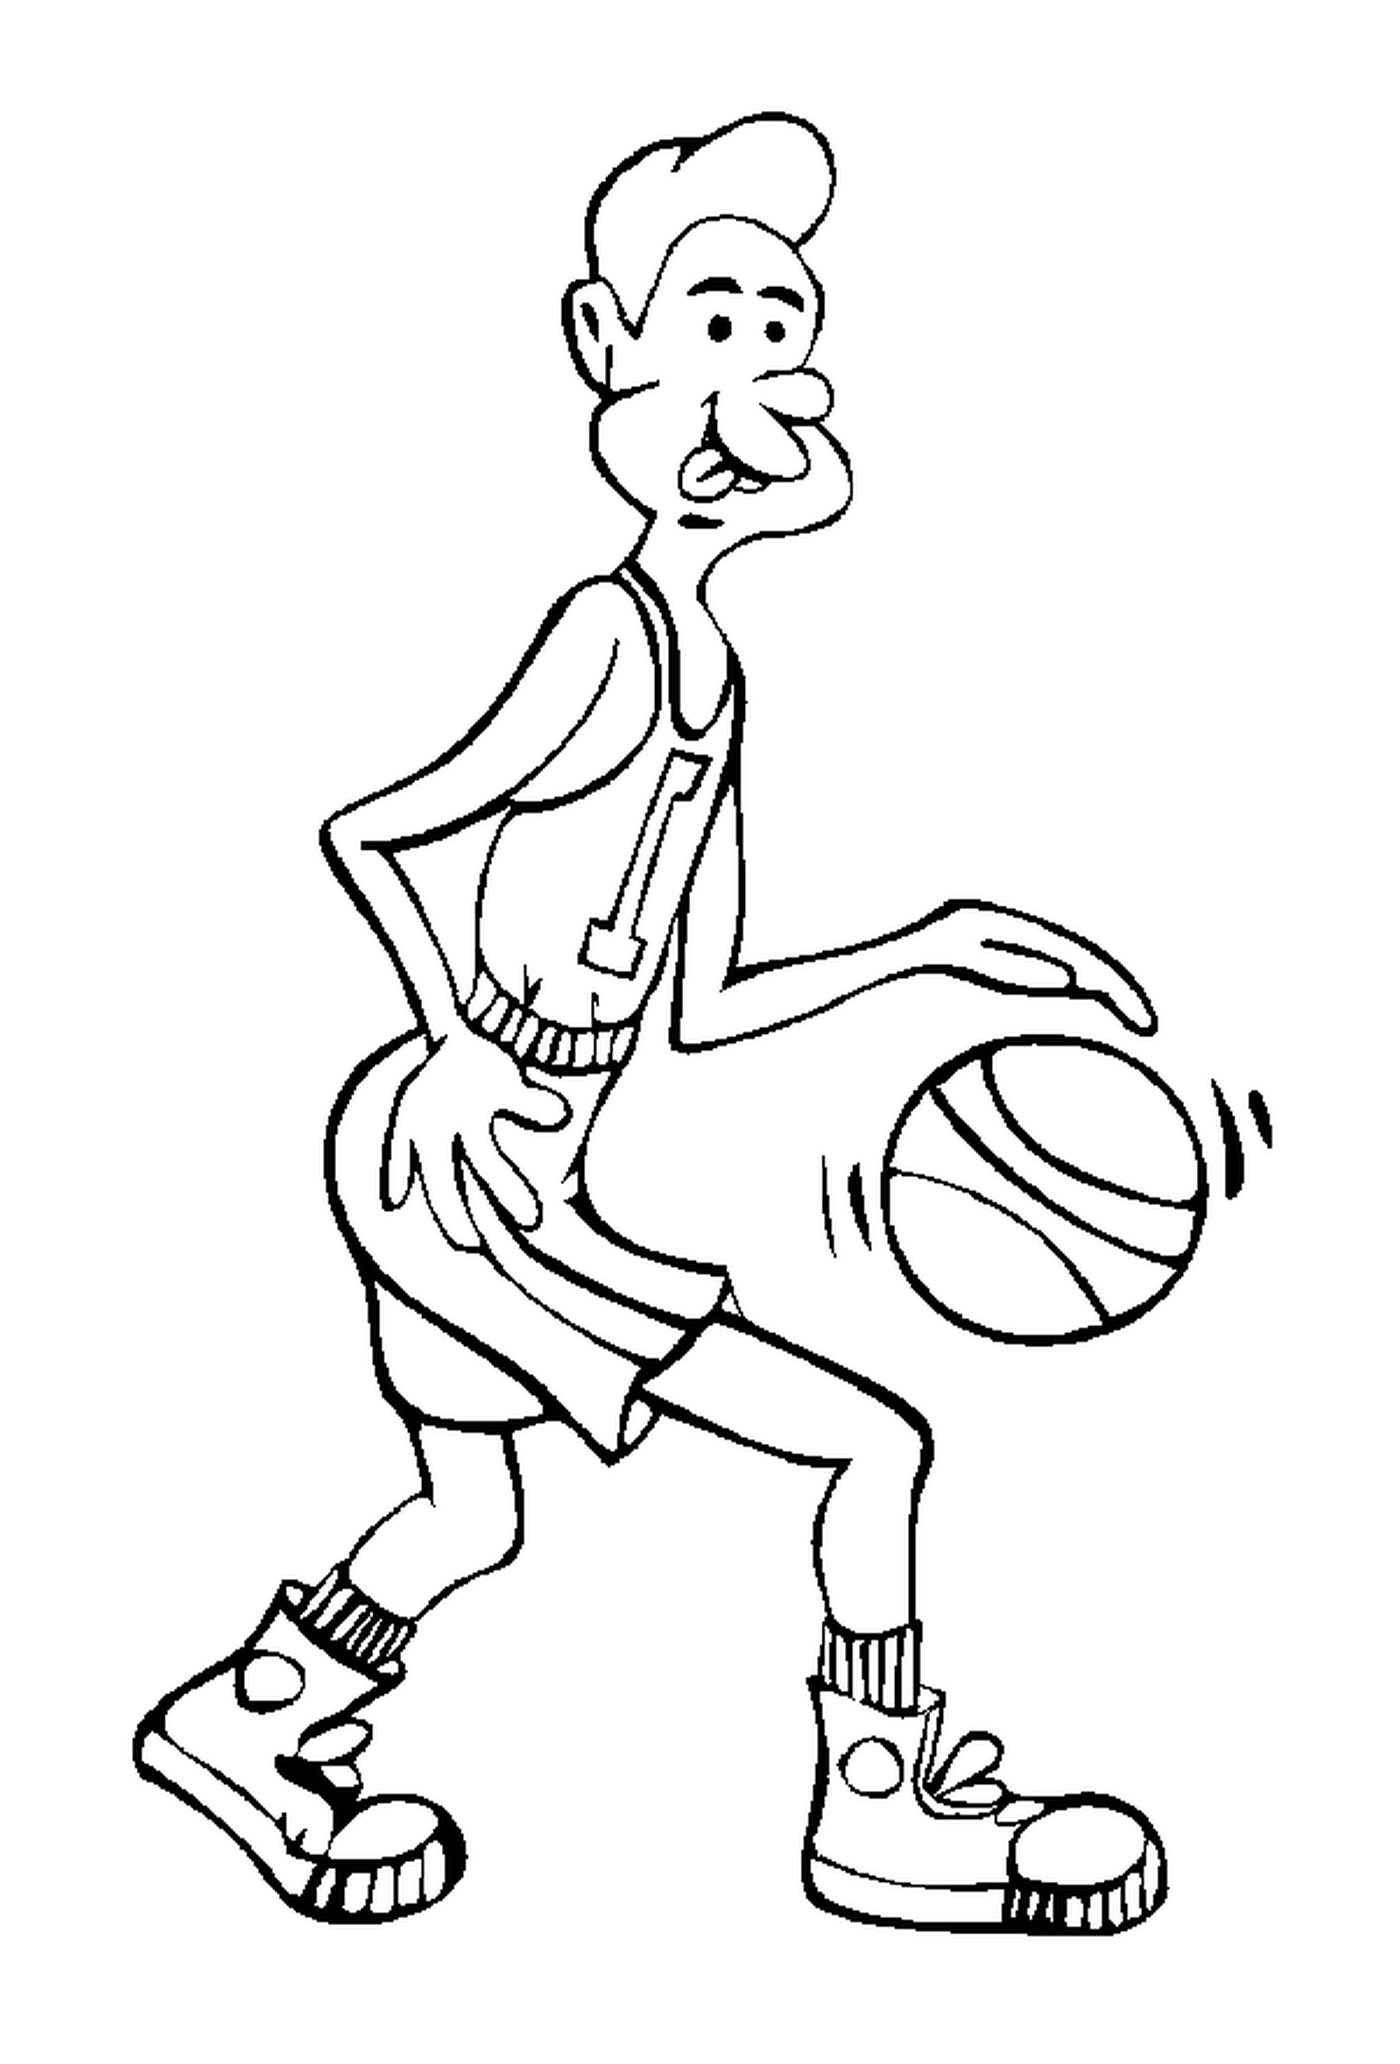  A basketball player holds a ball 